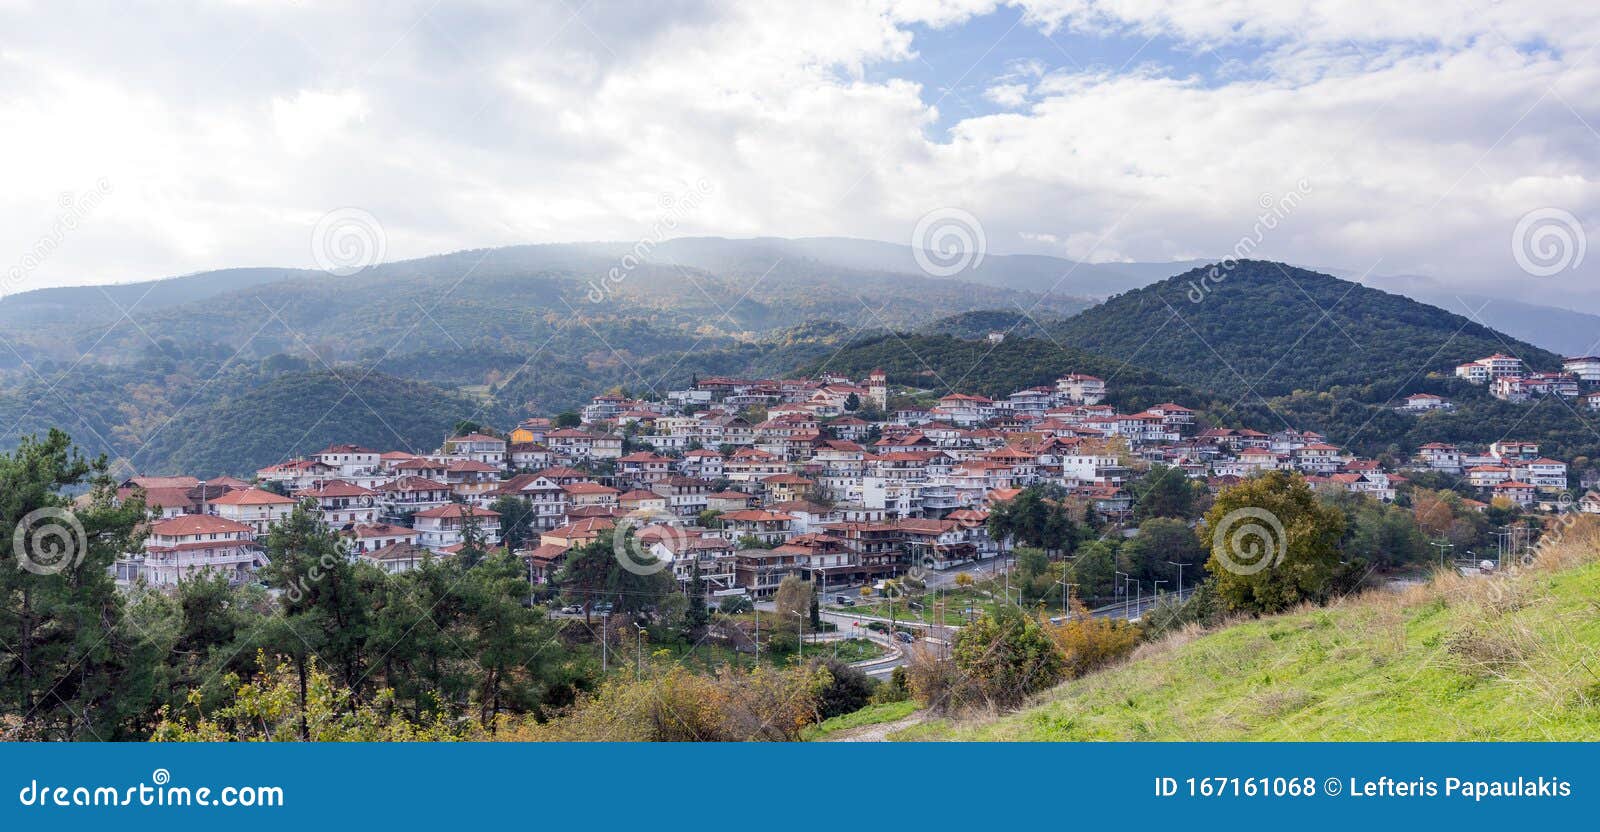 view of neos panteleimonas village, pieria, greece.